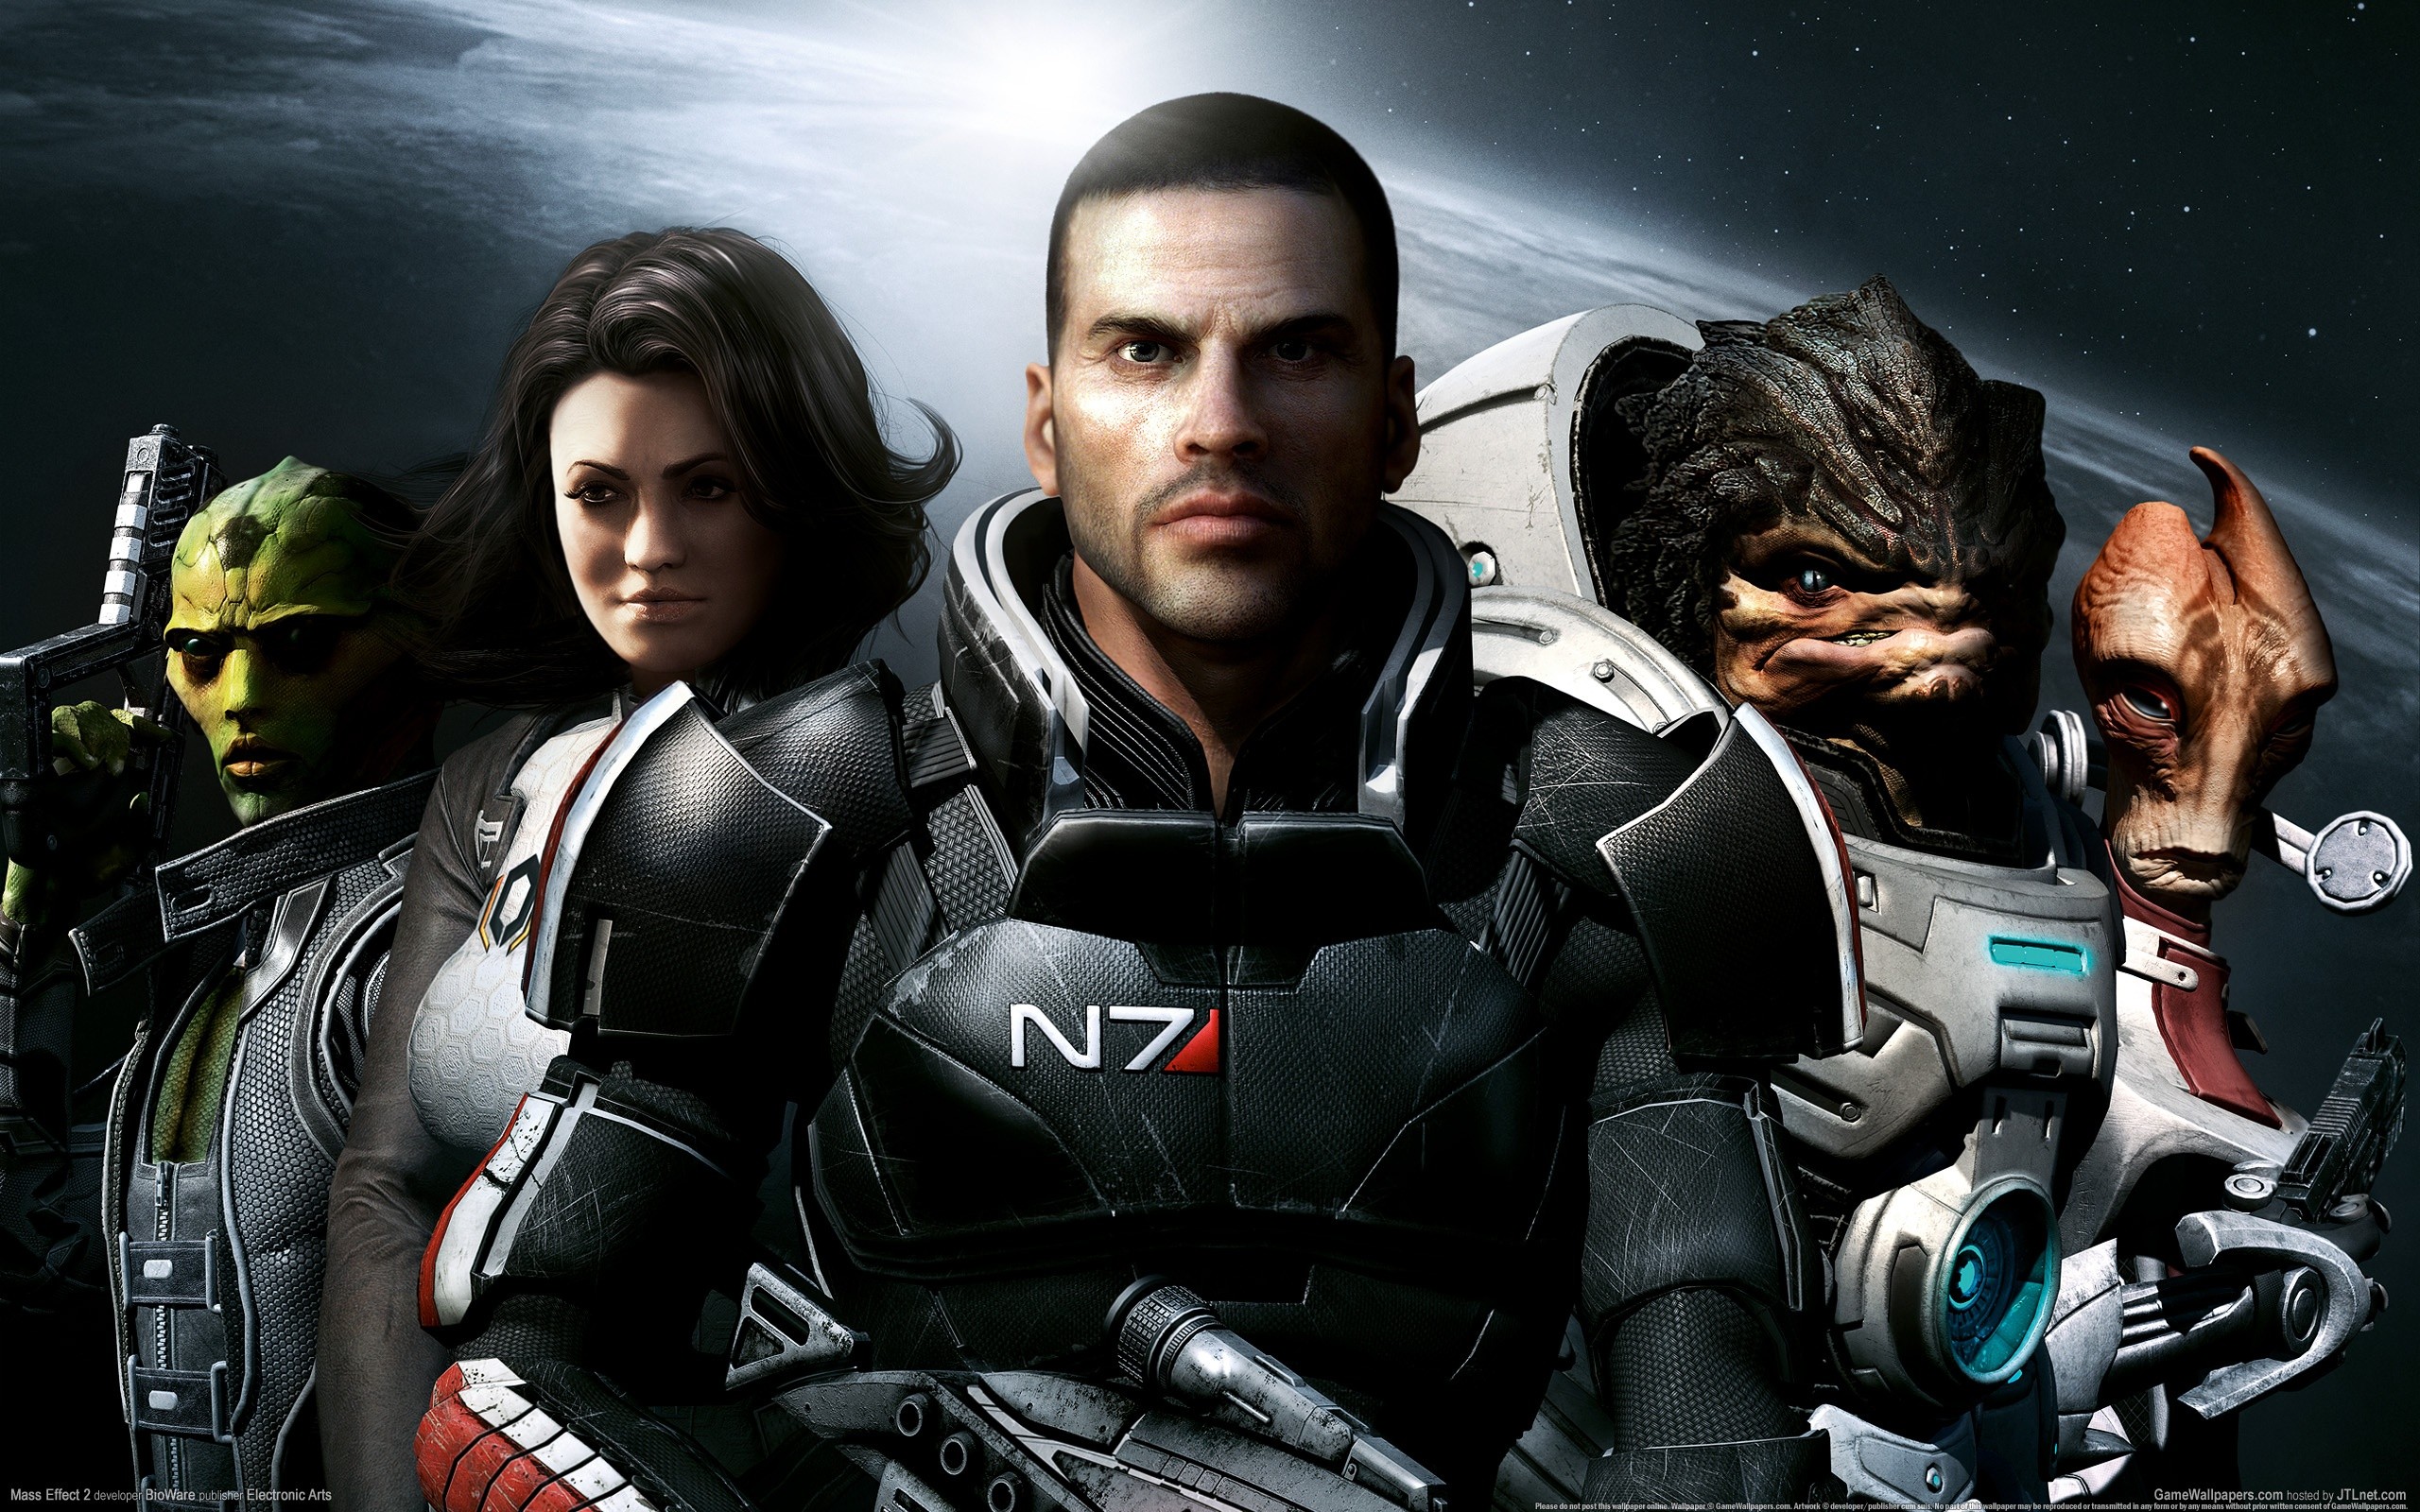 General 2560x1600 Mass Effect Mass Effect 2 video games Commander Shepard Miranda Lawson Mordin Solus Thane Krios Grunt (Mass Effect) John Shepard video game men video game girls science fiction video game characters Bioware Electronic Arts